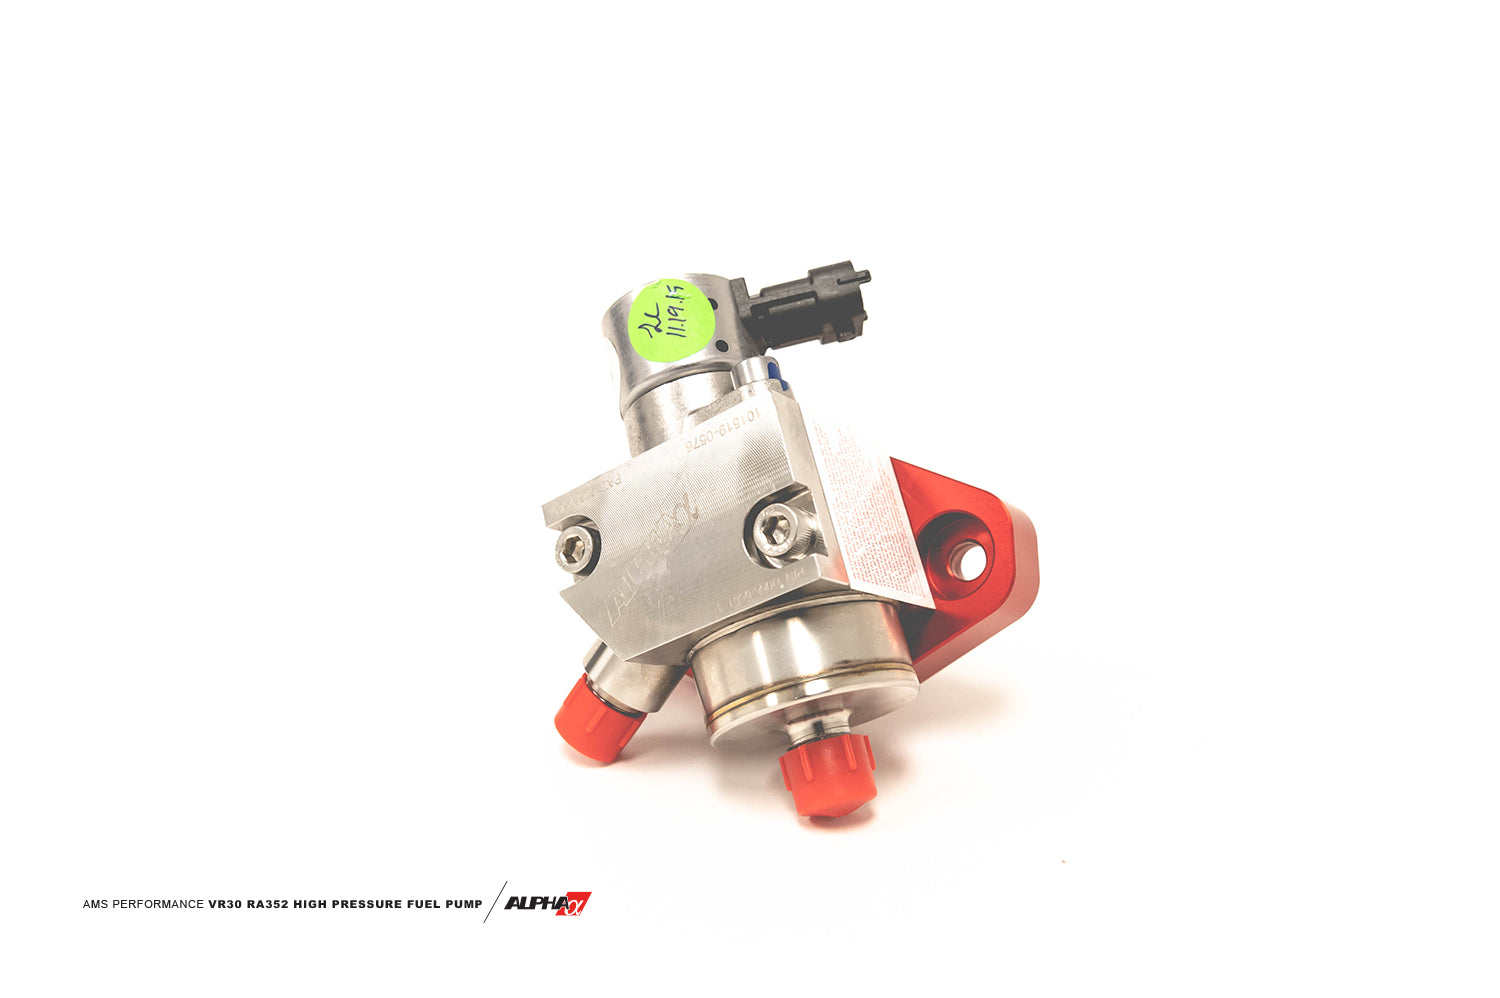 AMS ALP.28.07.0001-2 RA405 High Pressure Fuel Pump Kit INFINITI VR30 Photo-1 